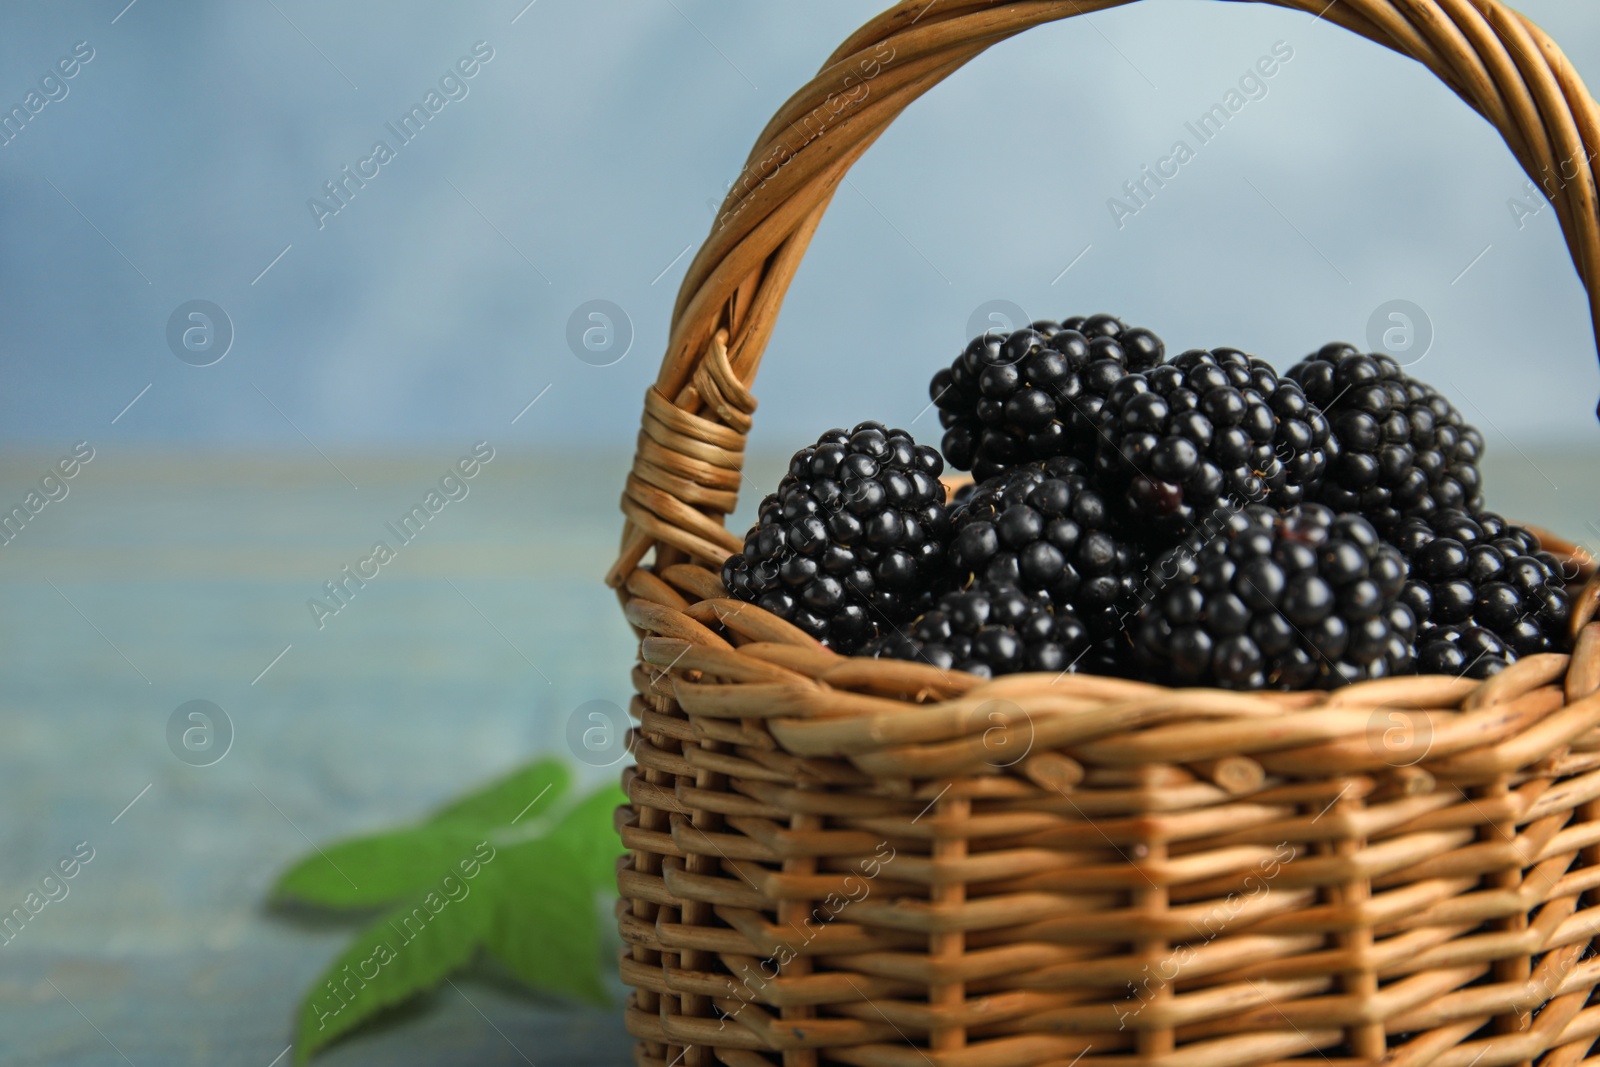 Photo of Wicker basket of tasty blackberries on blue background, closeup